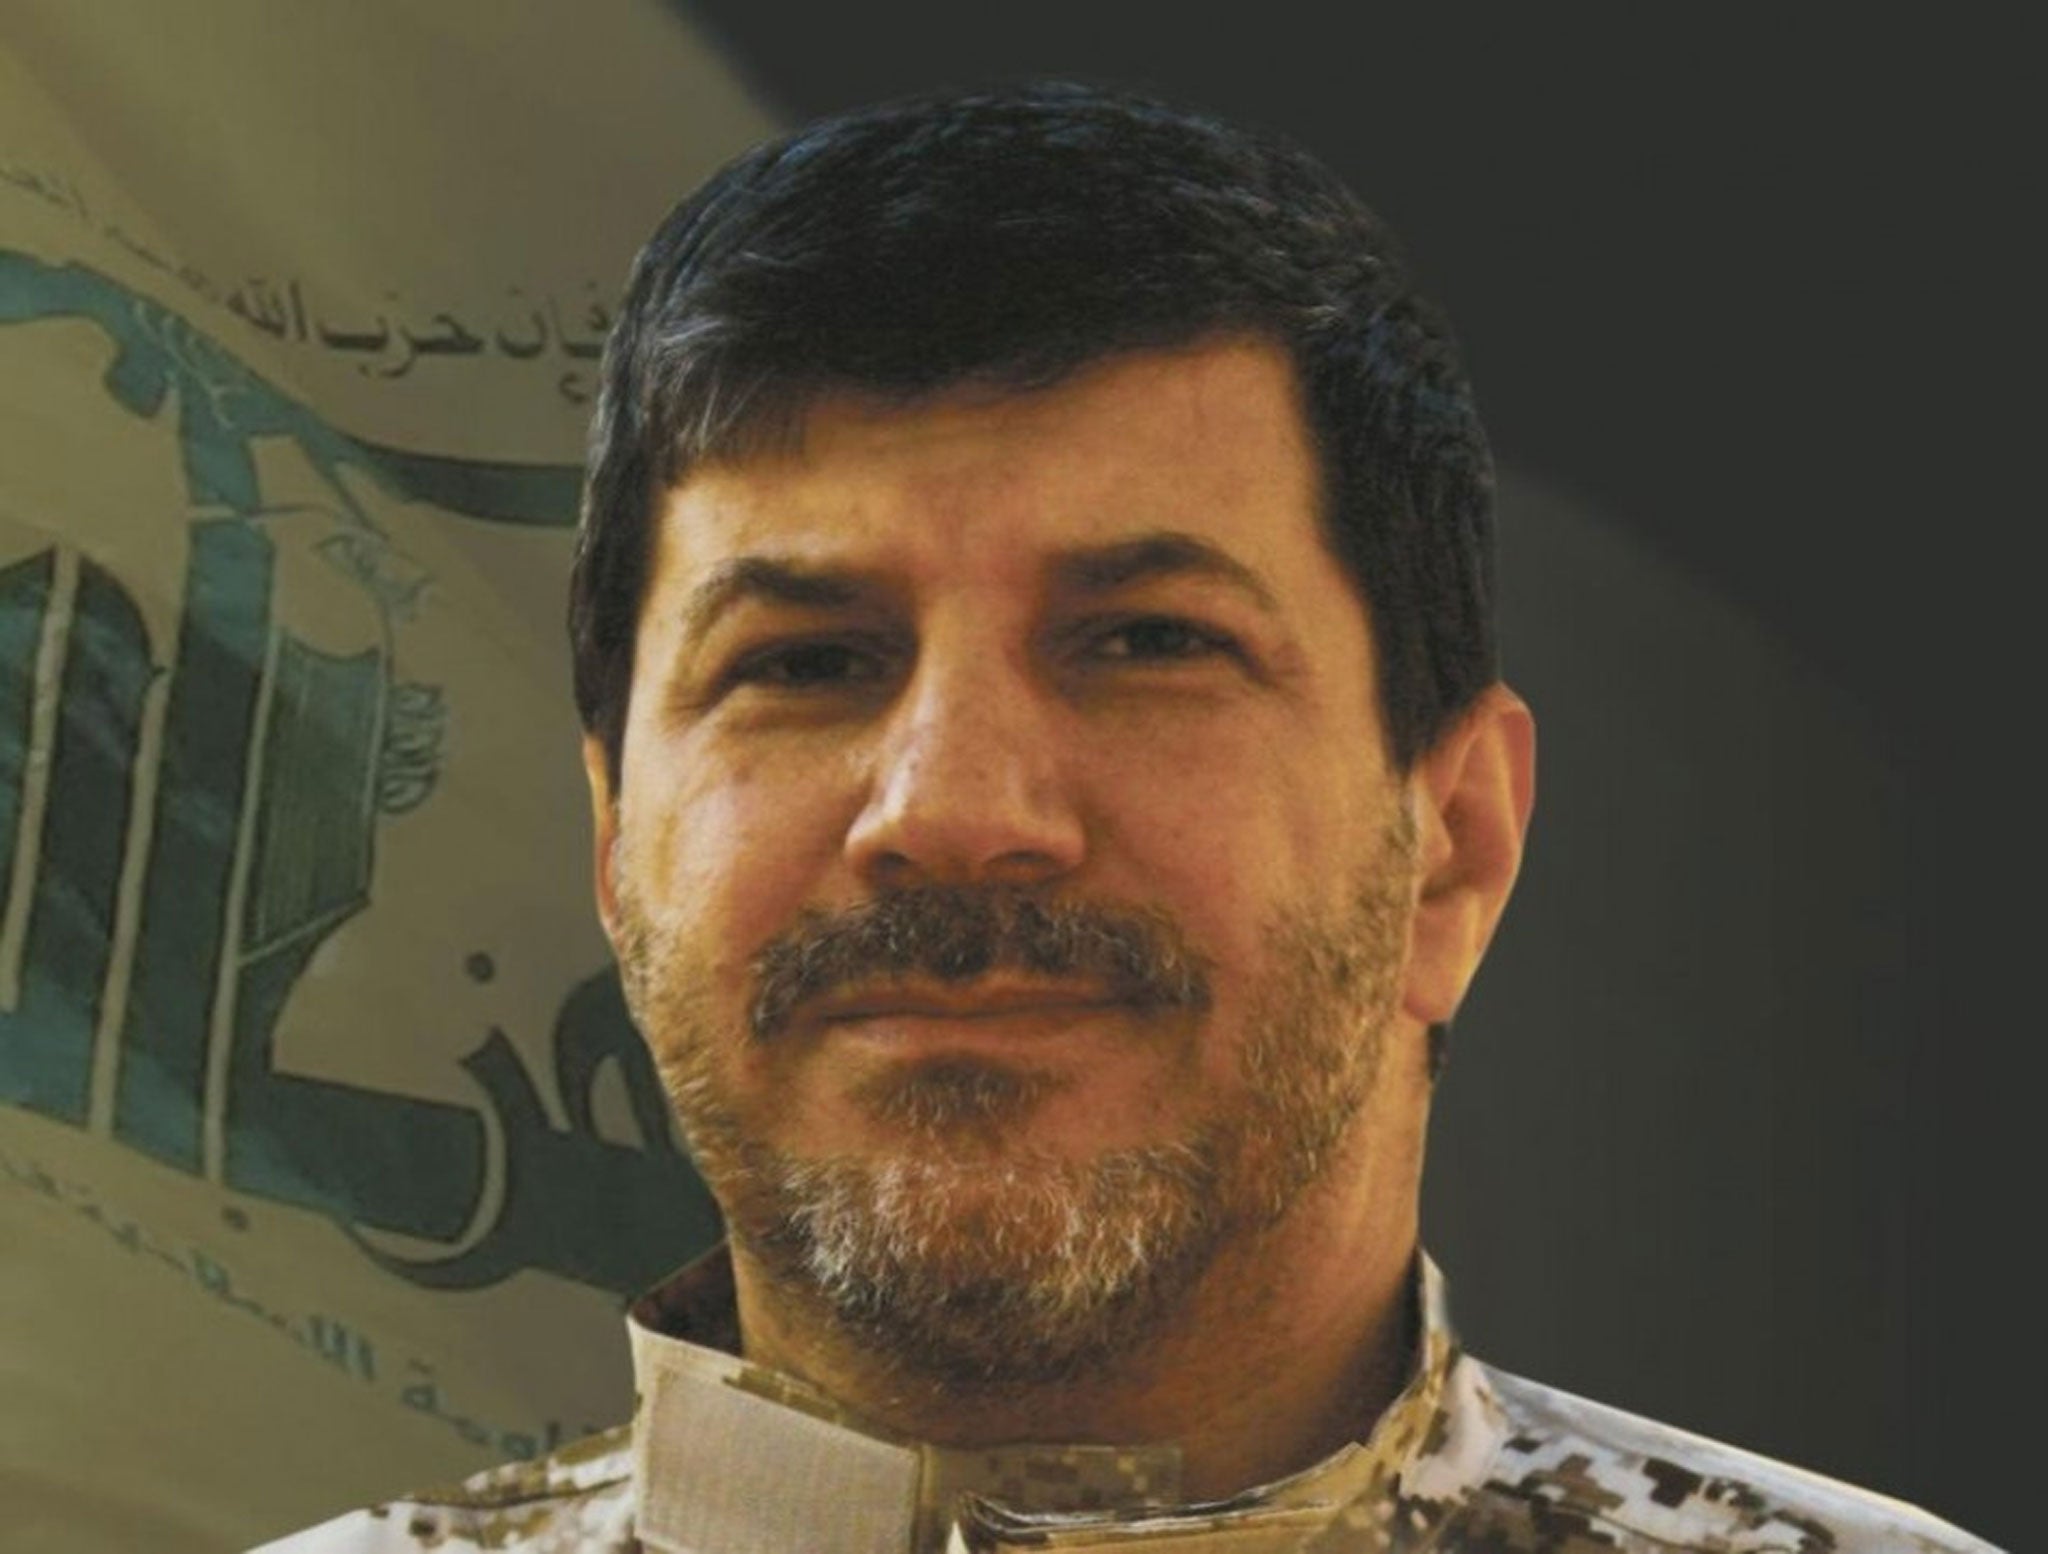 The late Hezbollah commander Hassan al-Laqqis